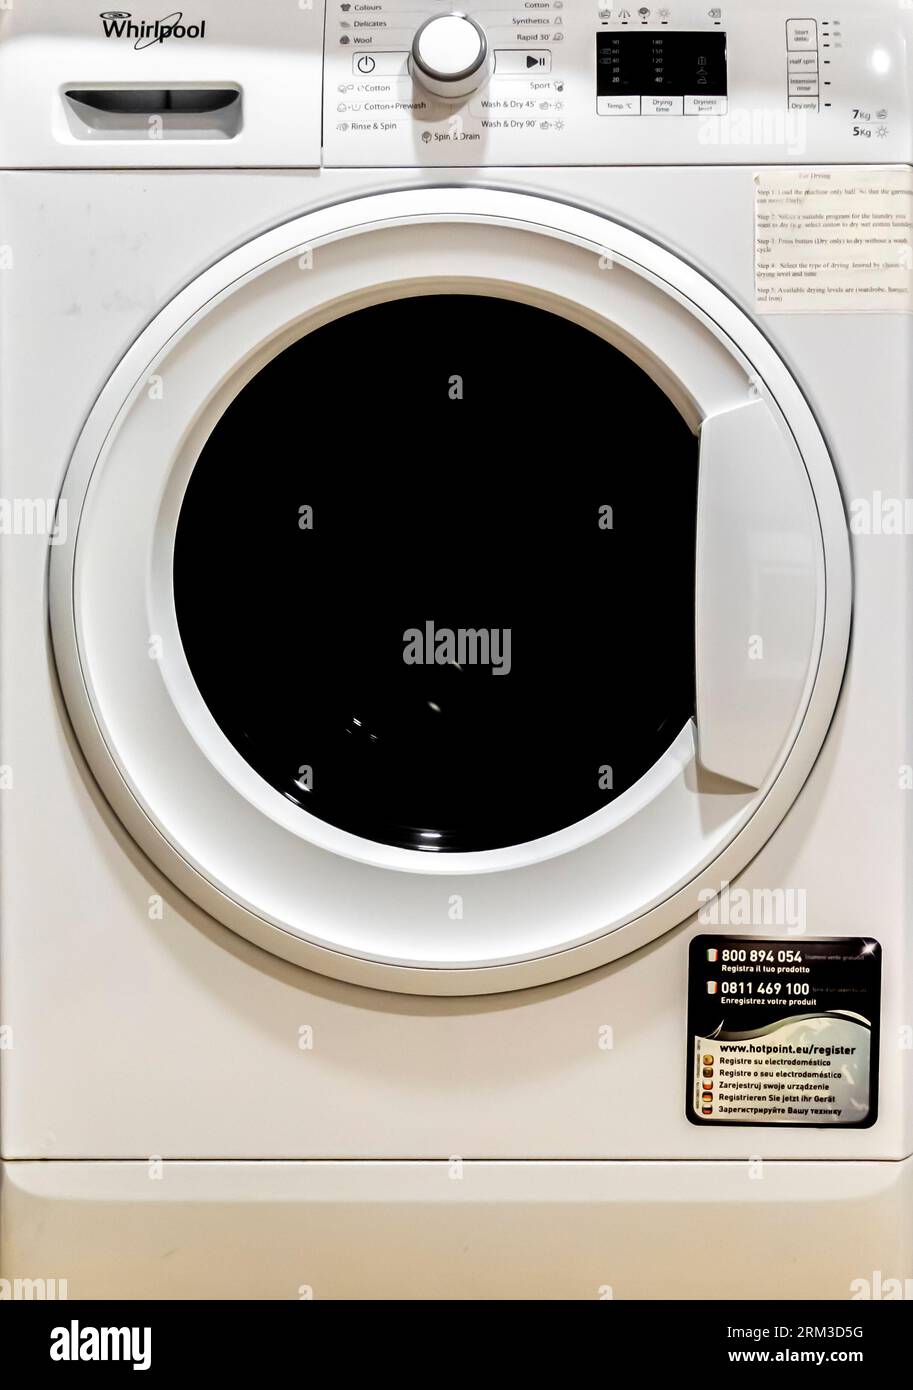 Whirlpool WWDE 7512 Washer Dryer Freestanding Front-Load White Washing machine Stock Photo